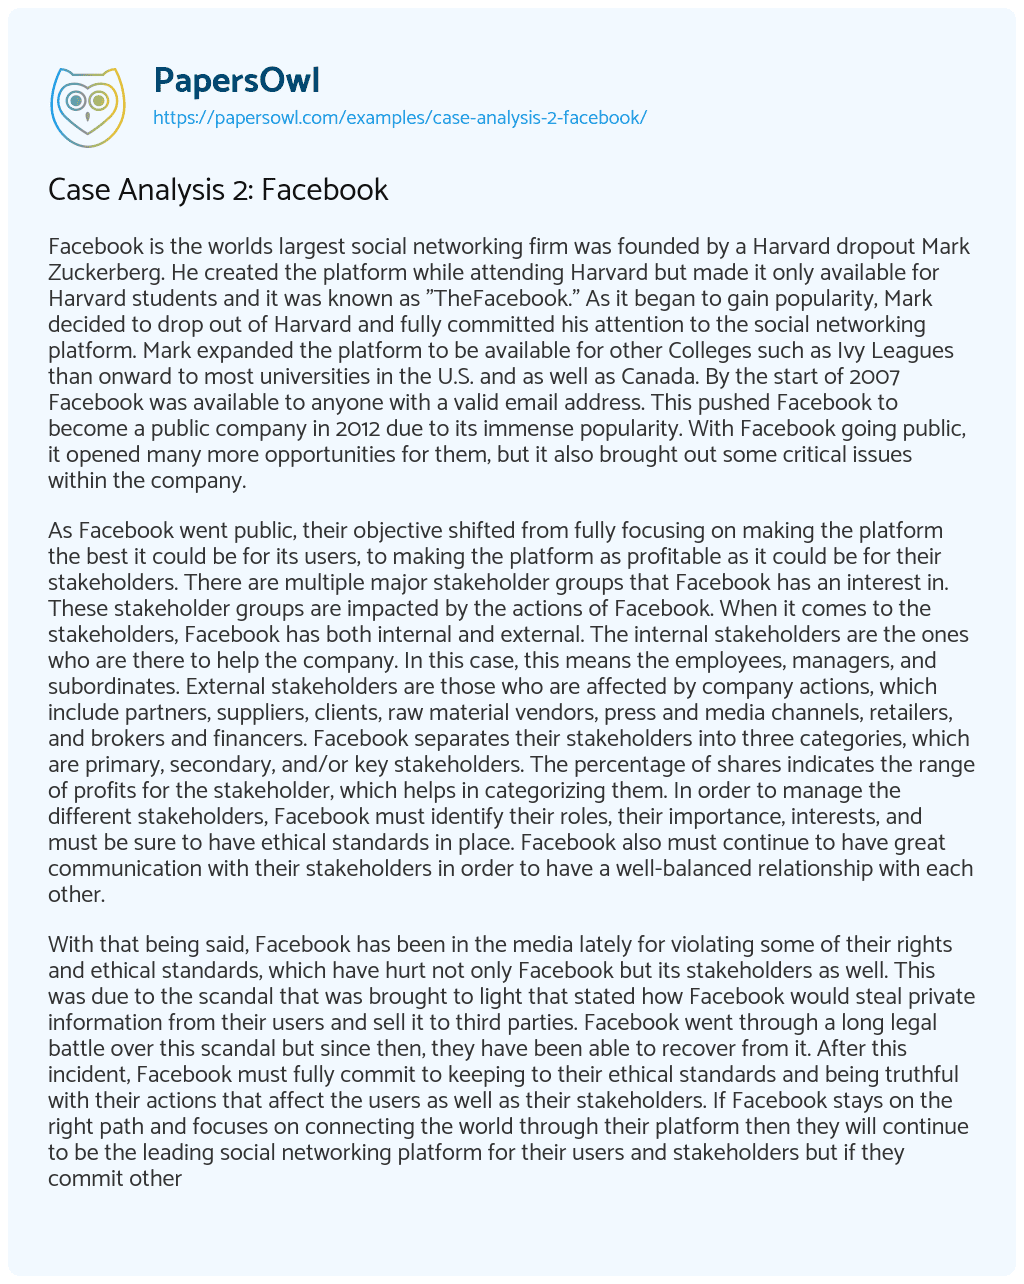 Case Analysis 2: Facebook essay